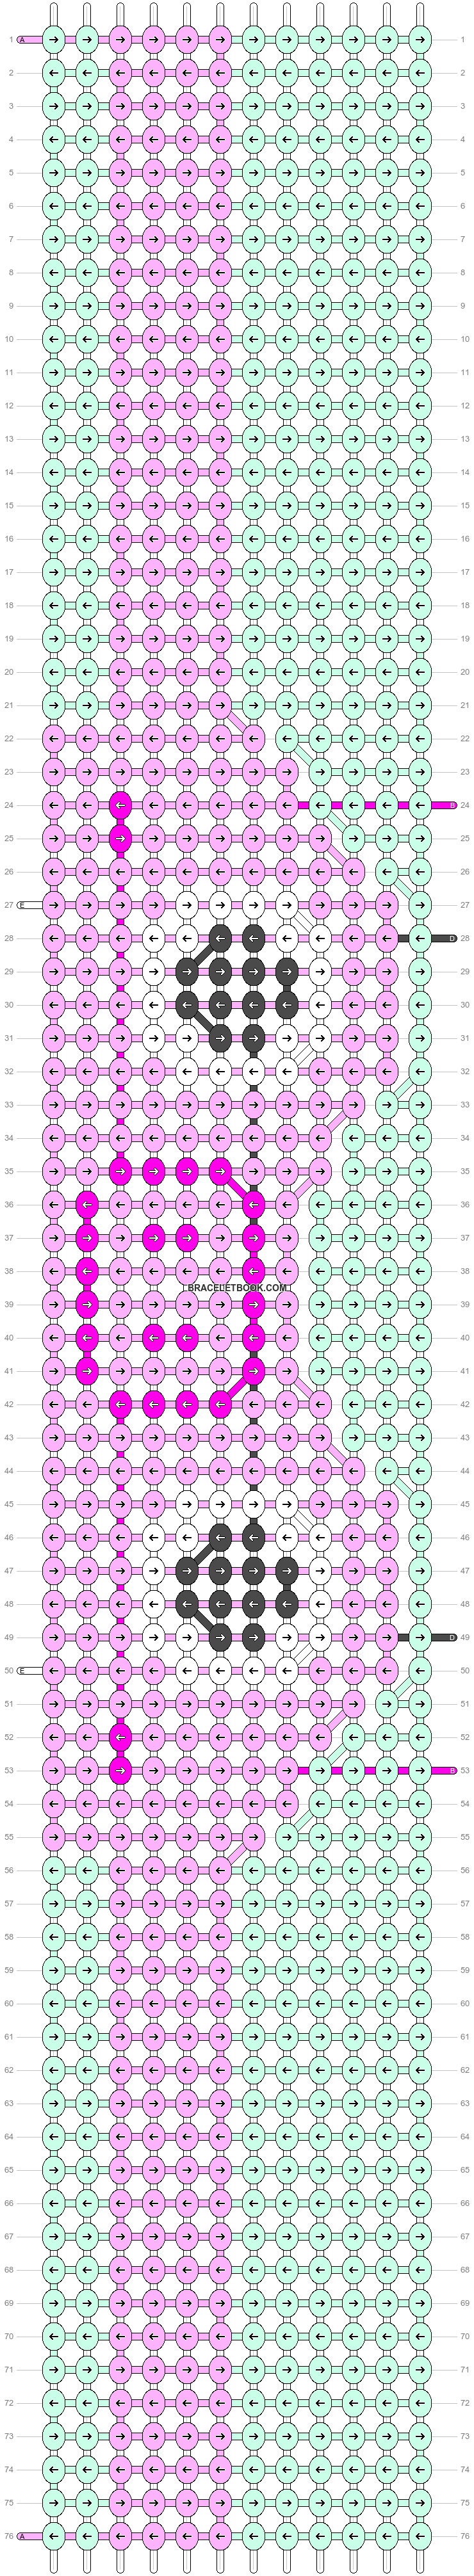 Alpha pattern #93503 pattern